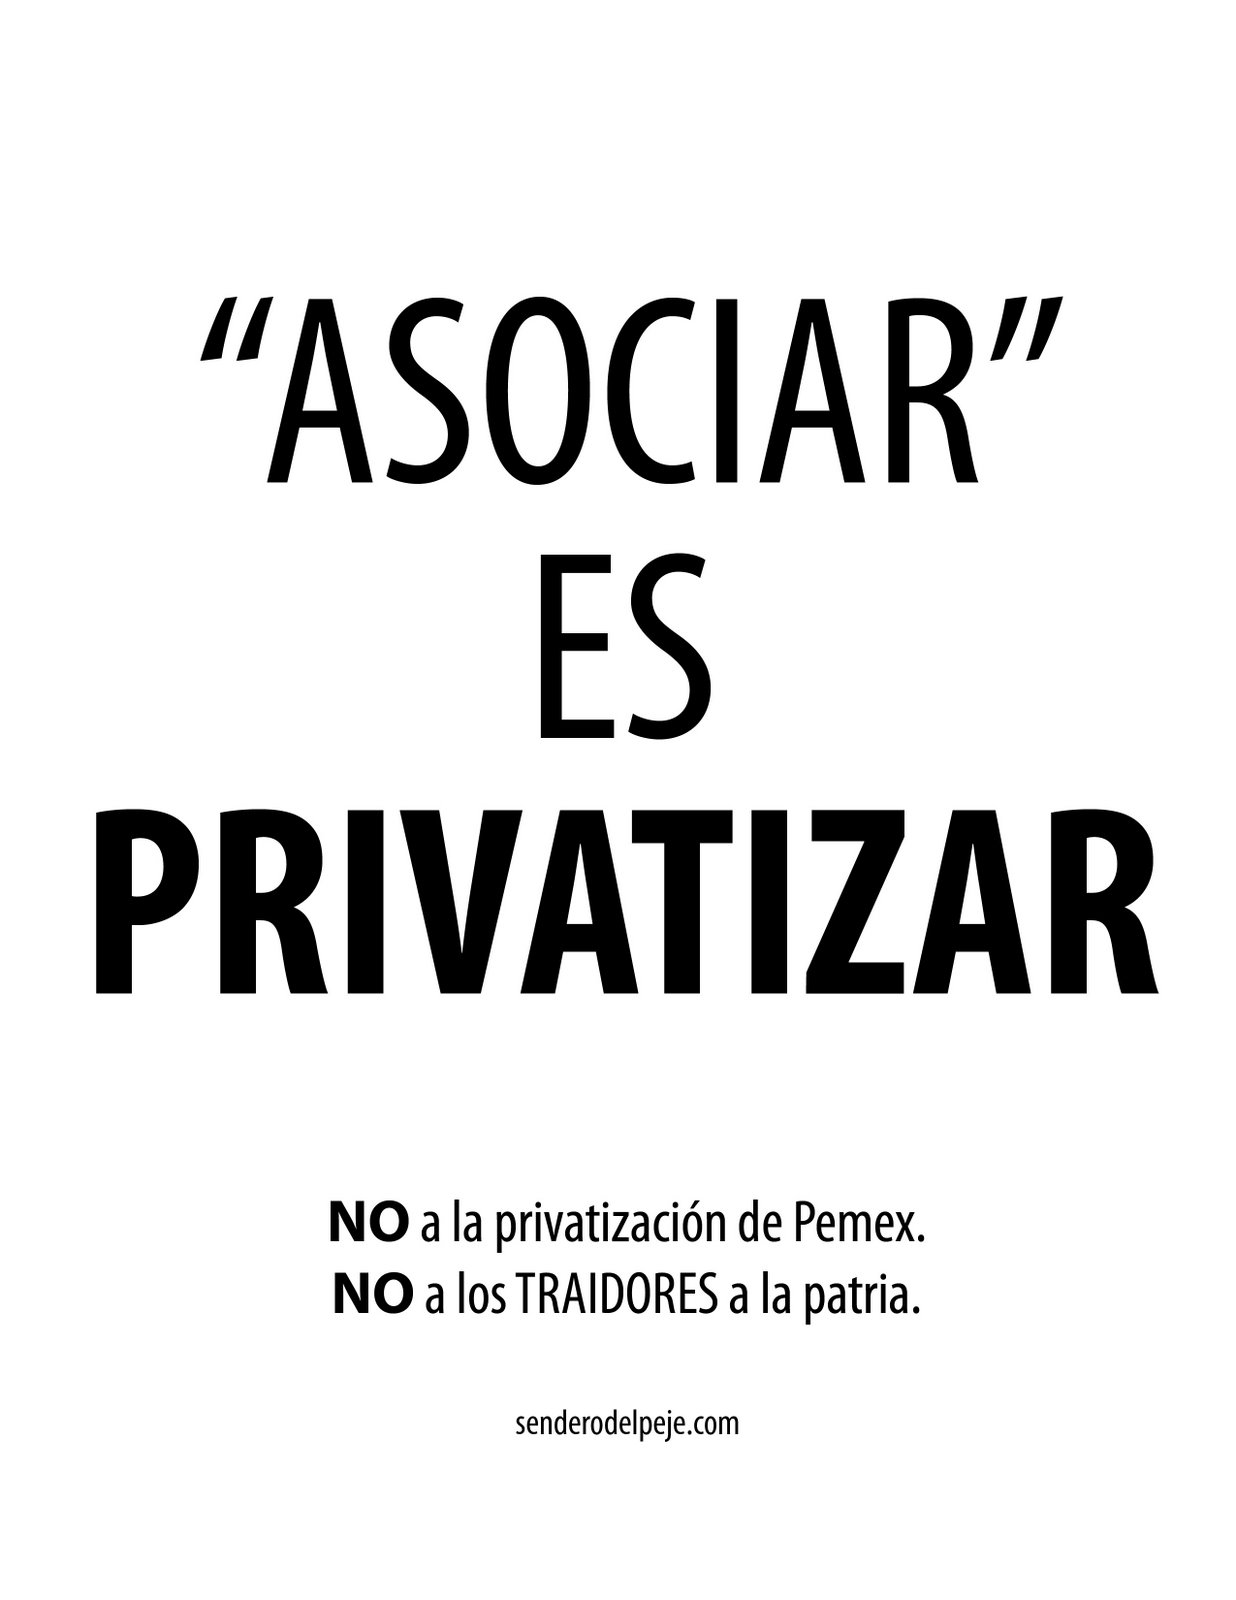 [asociar_es_privatizar.jpg]